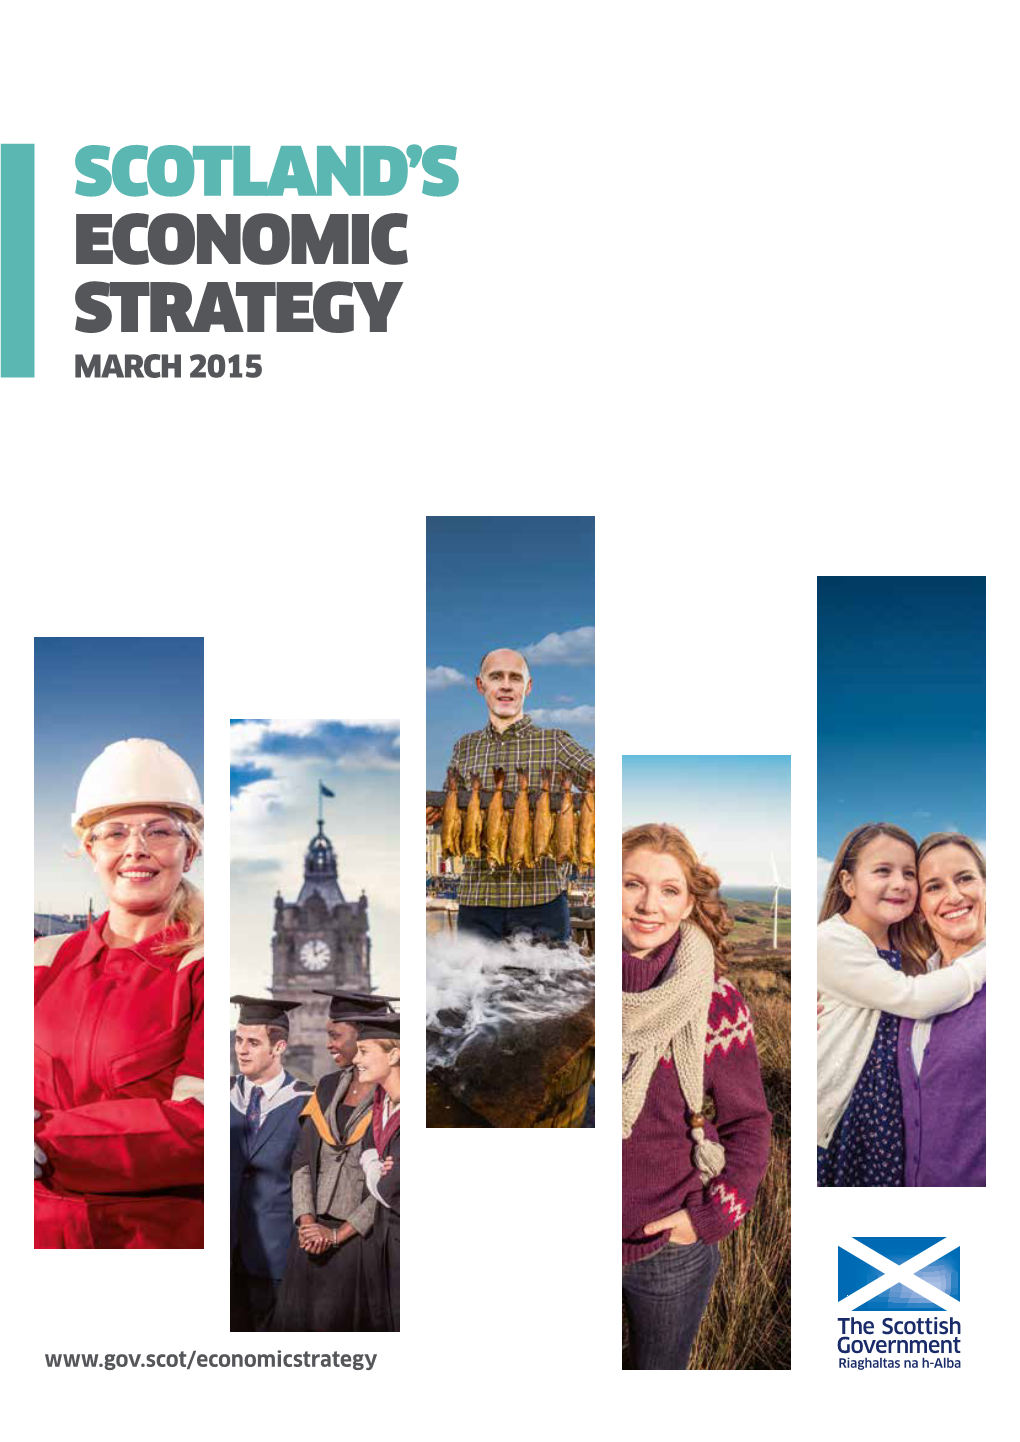 Scotland's Economic Strategy March 2015